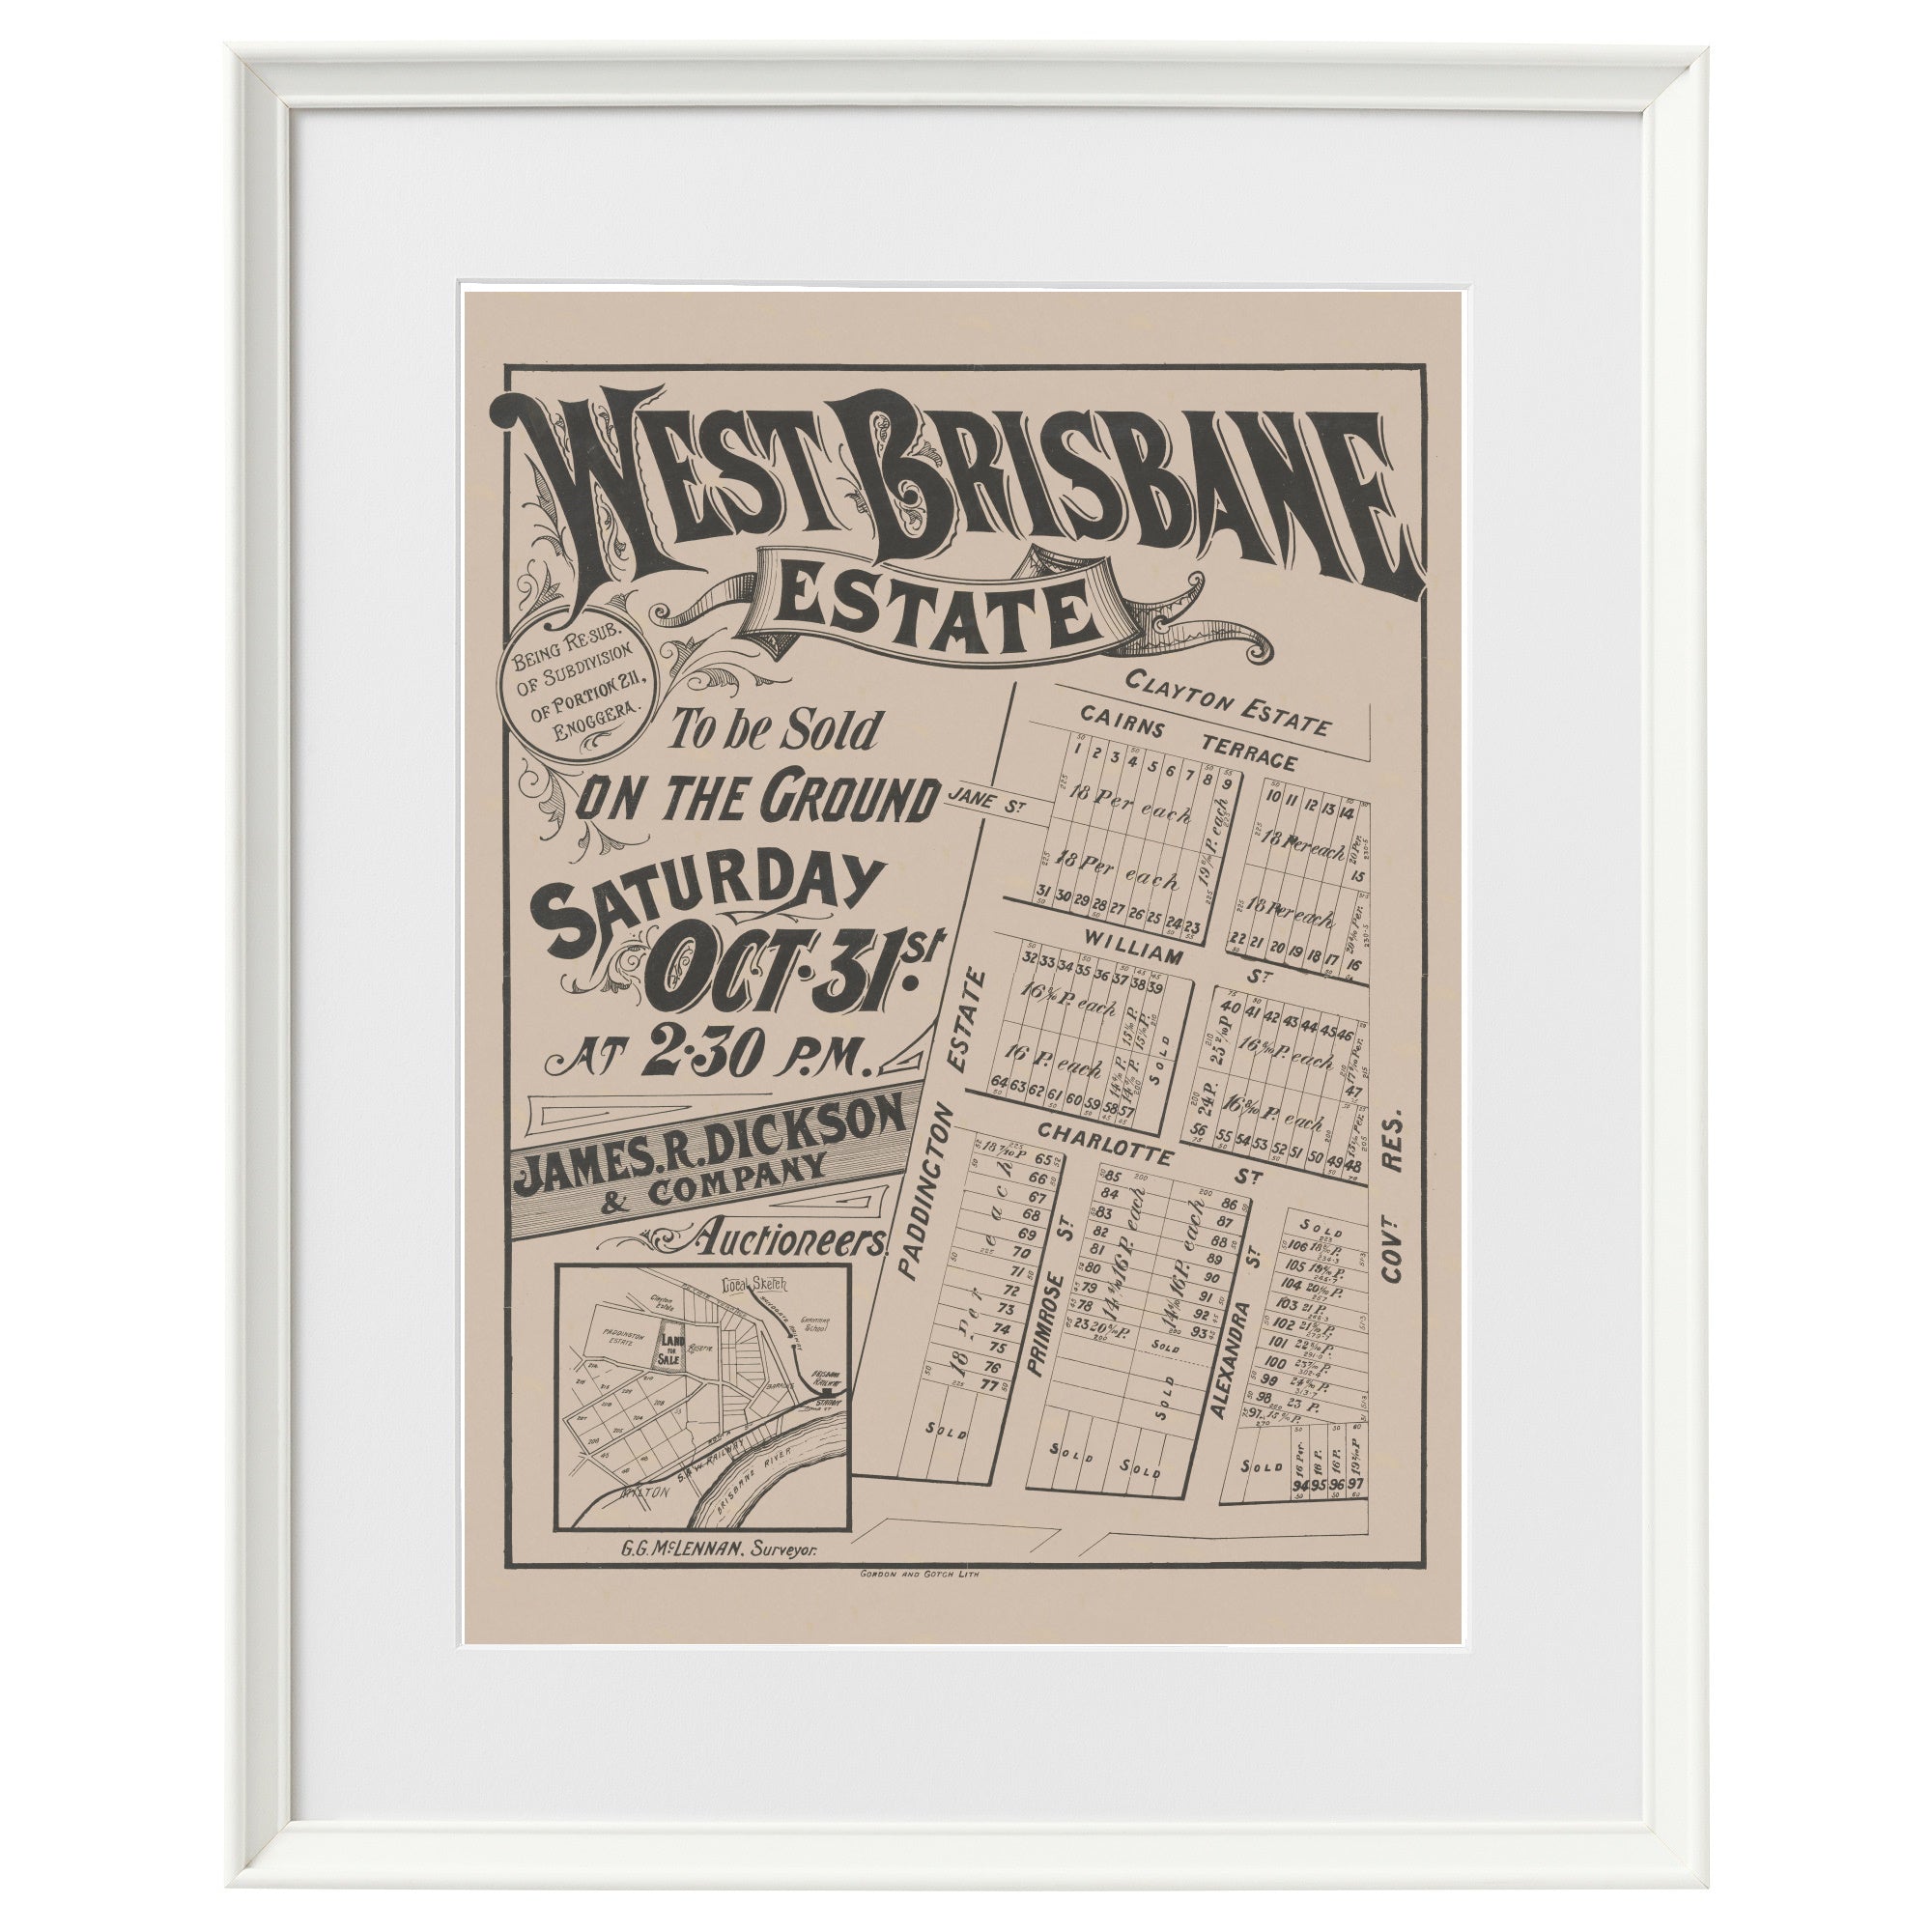 1885 Paddington - West Brisbane Estate